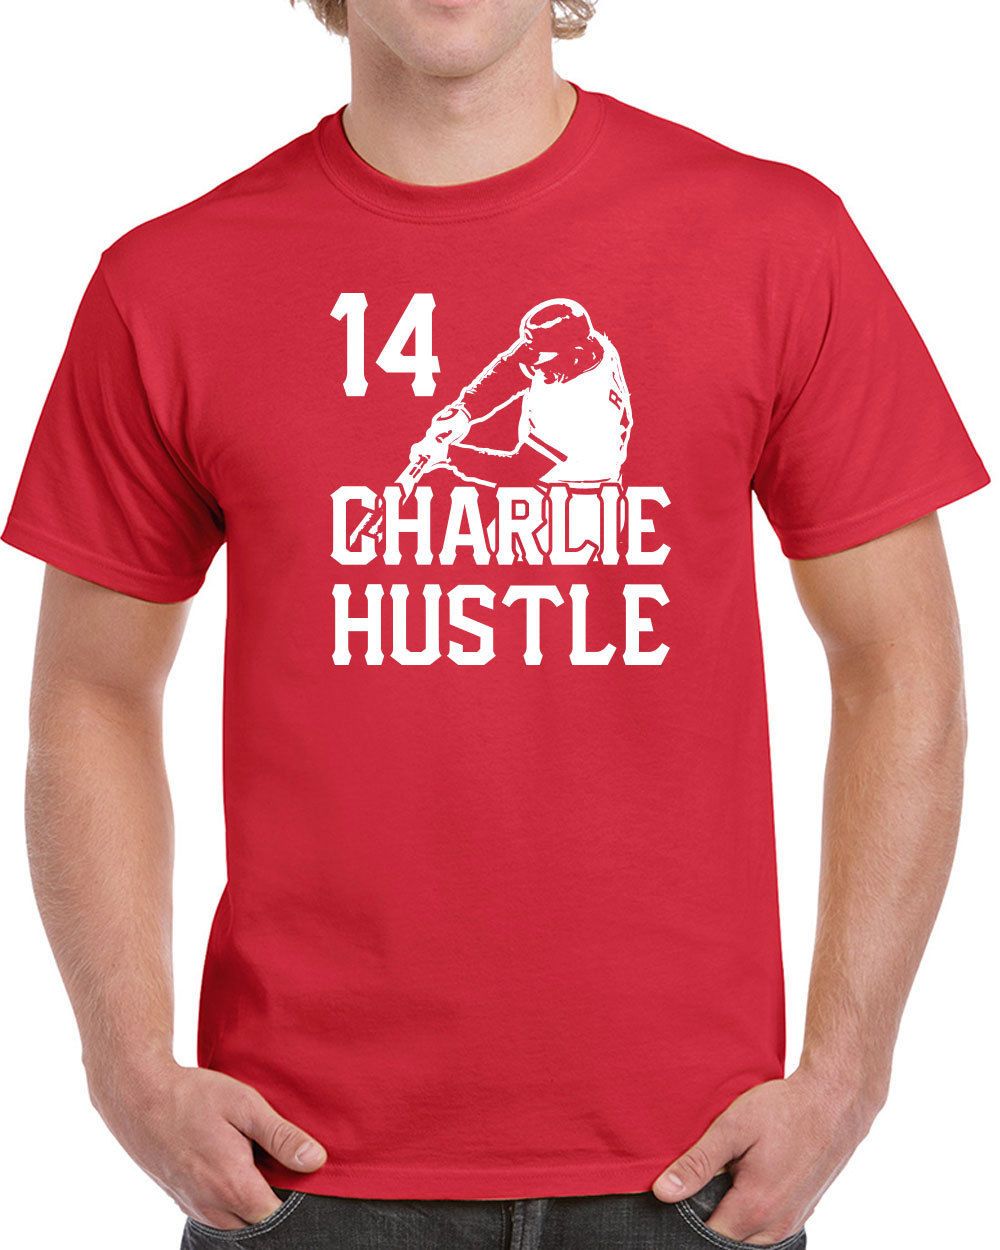 charlie hustle t shirt